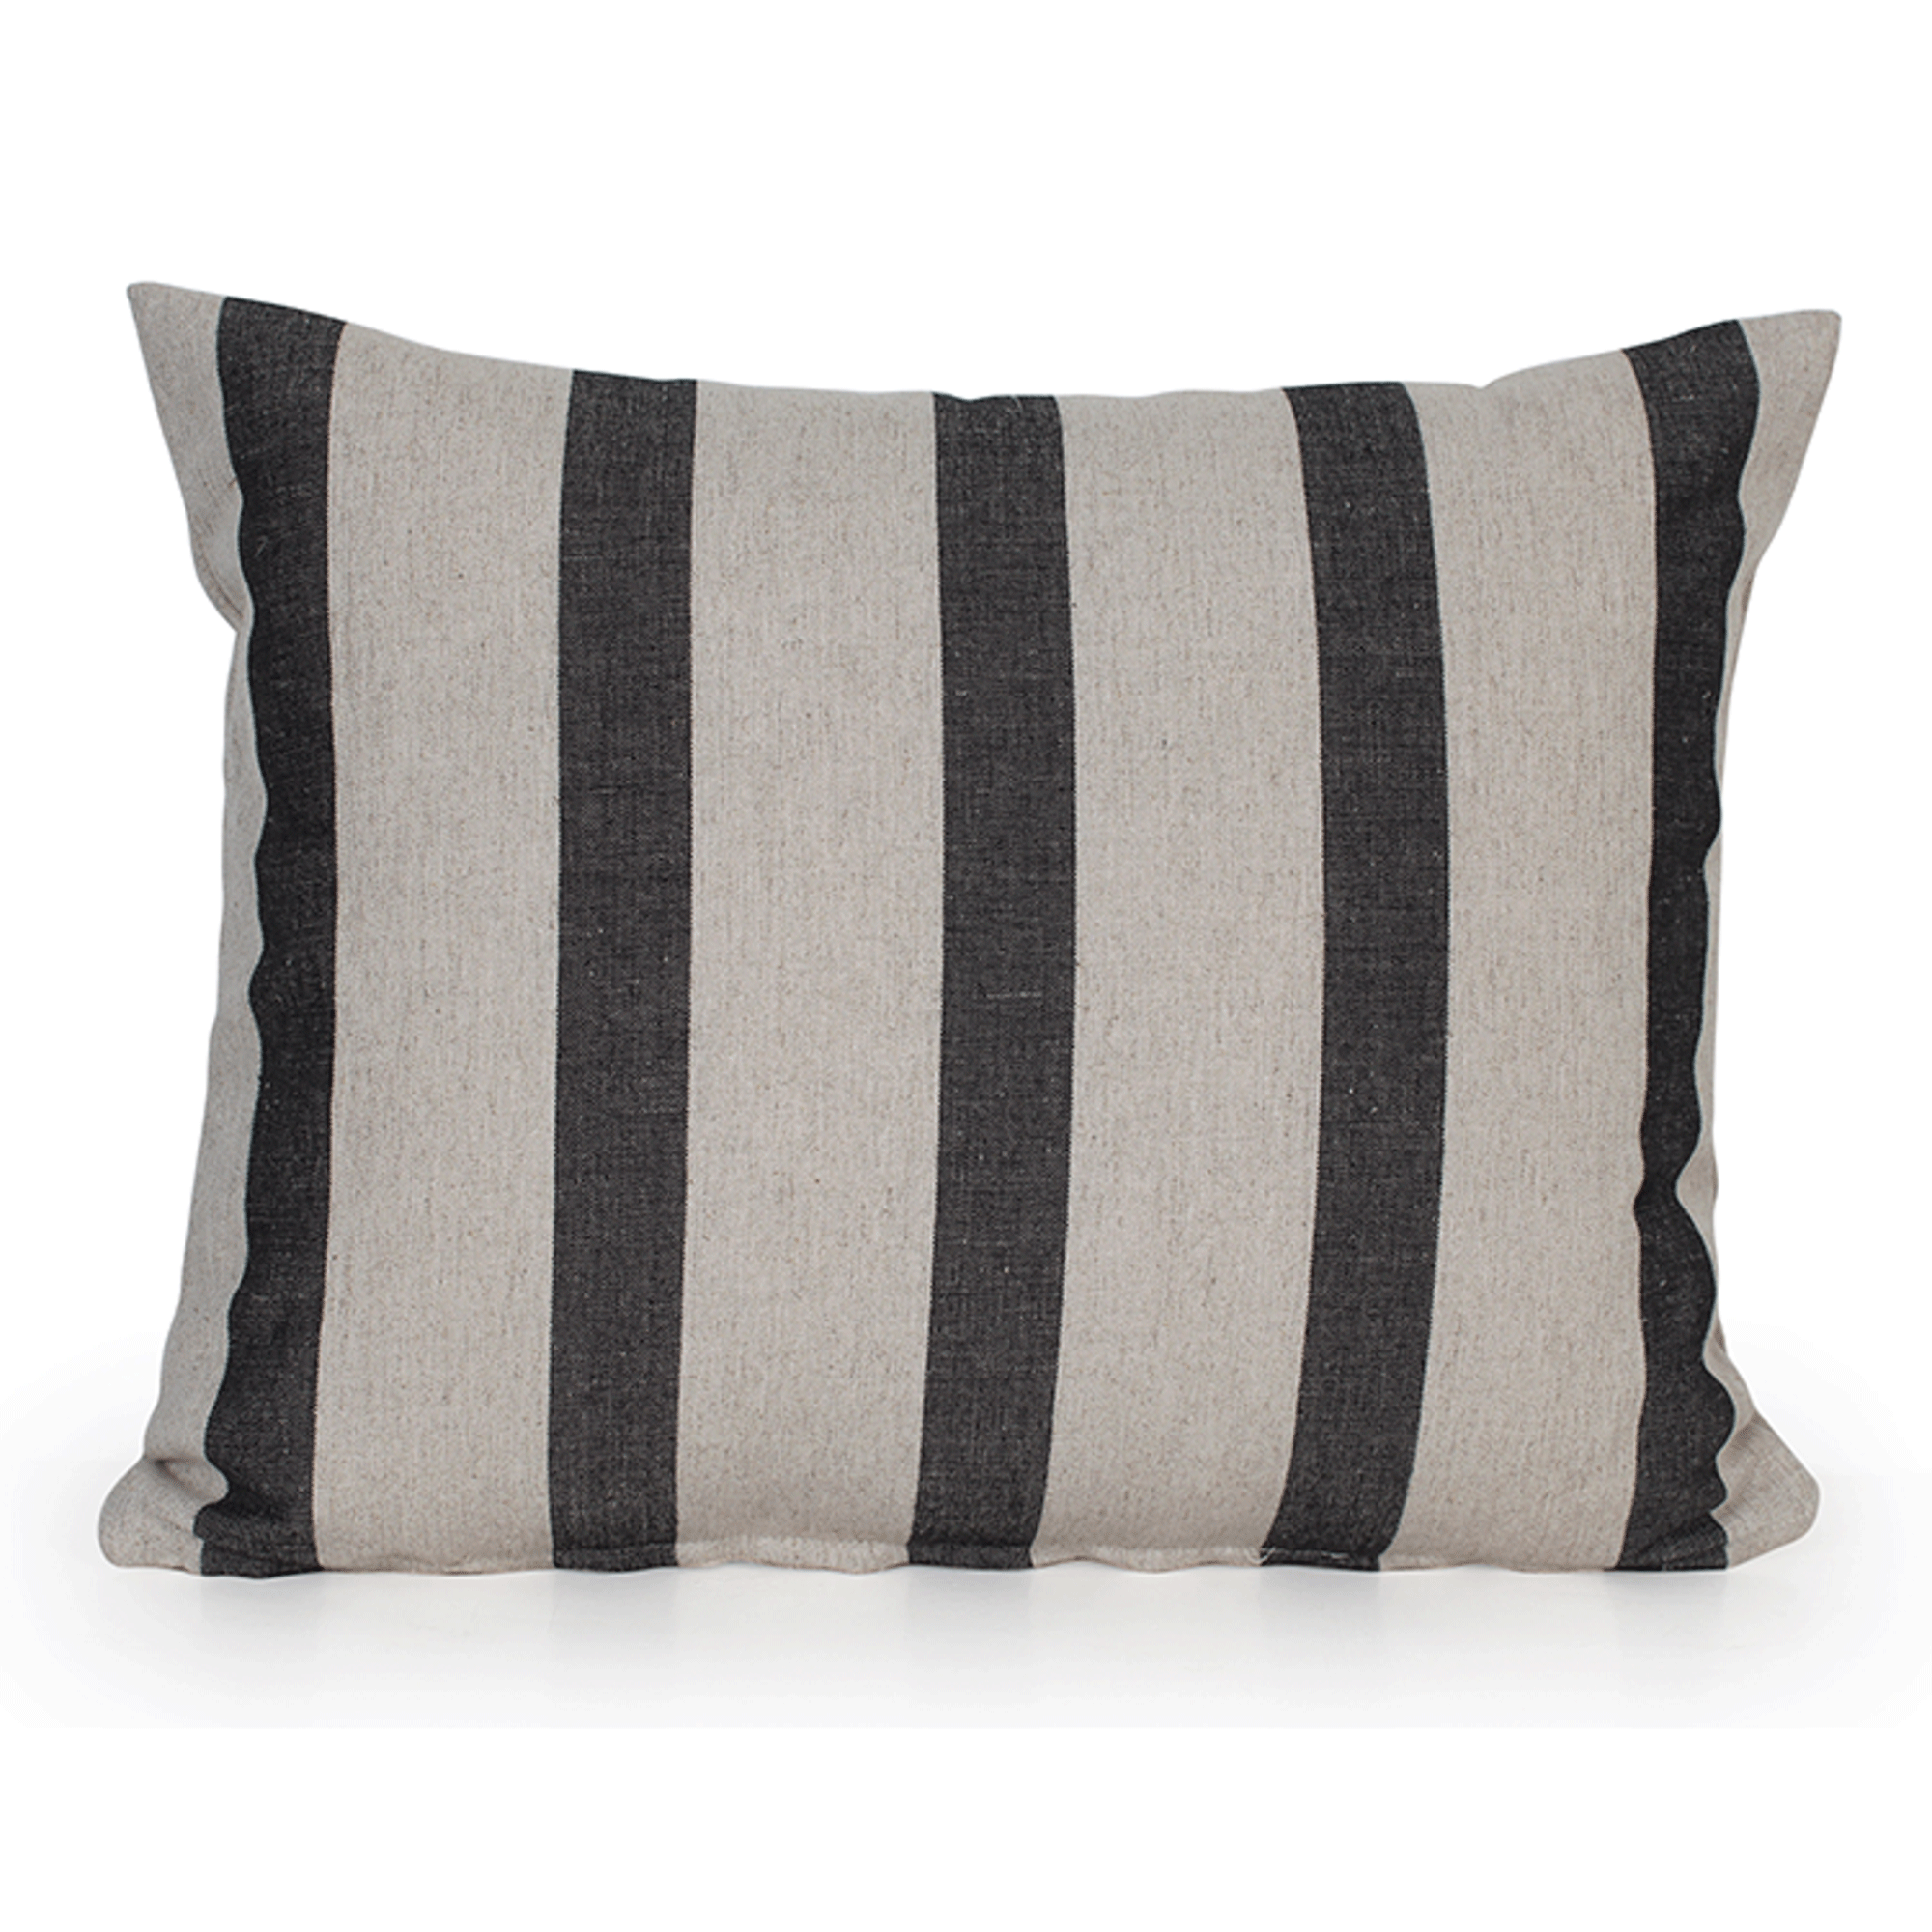 Black and white stripe cushion